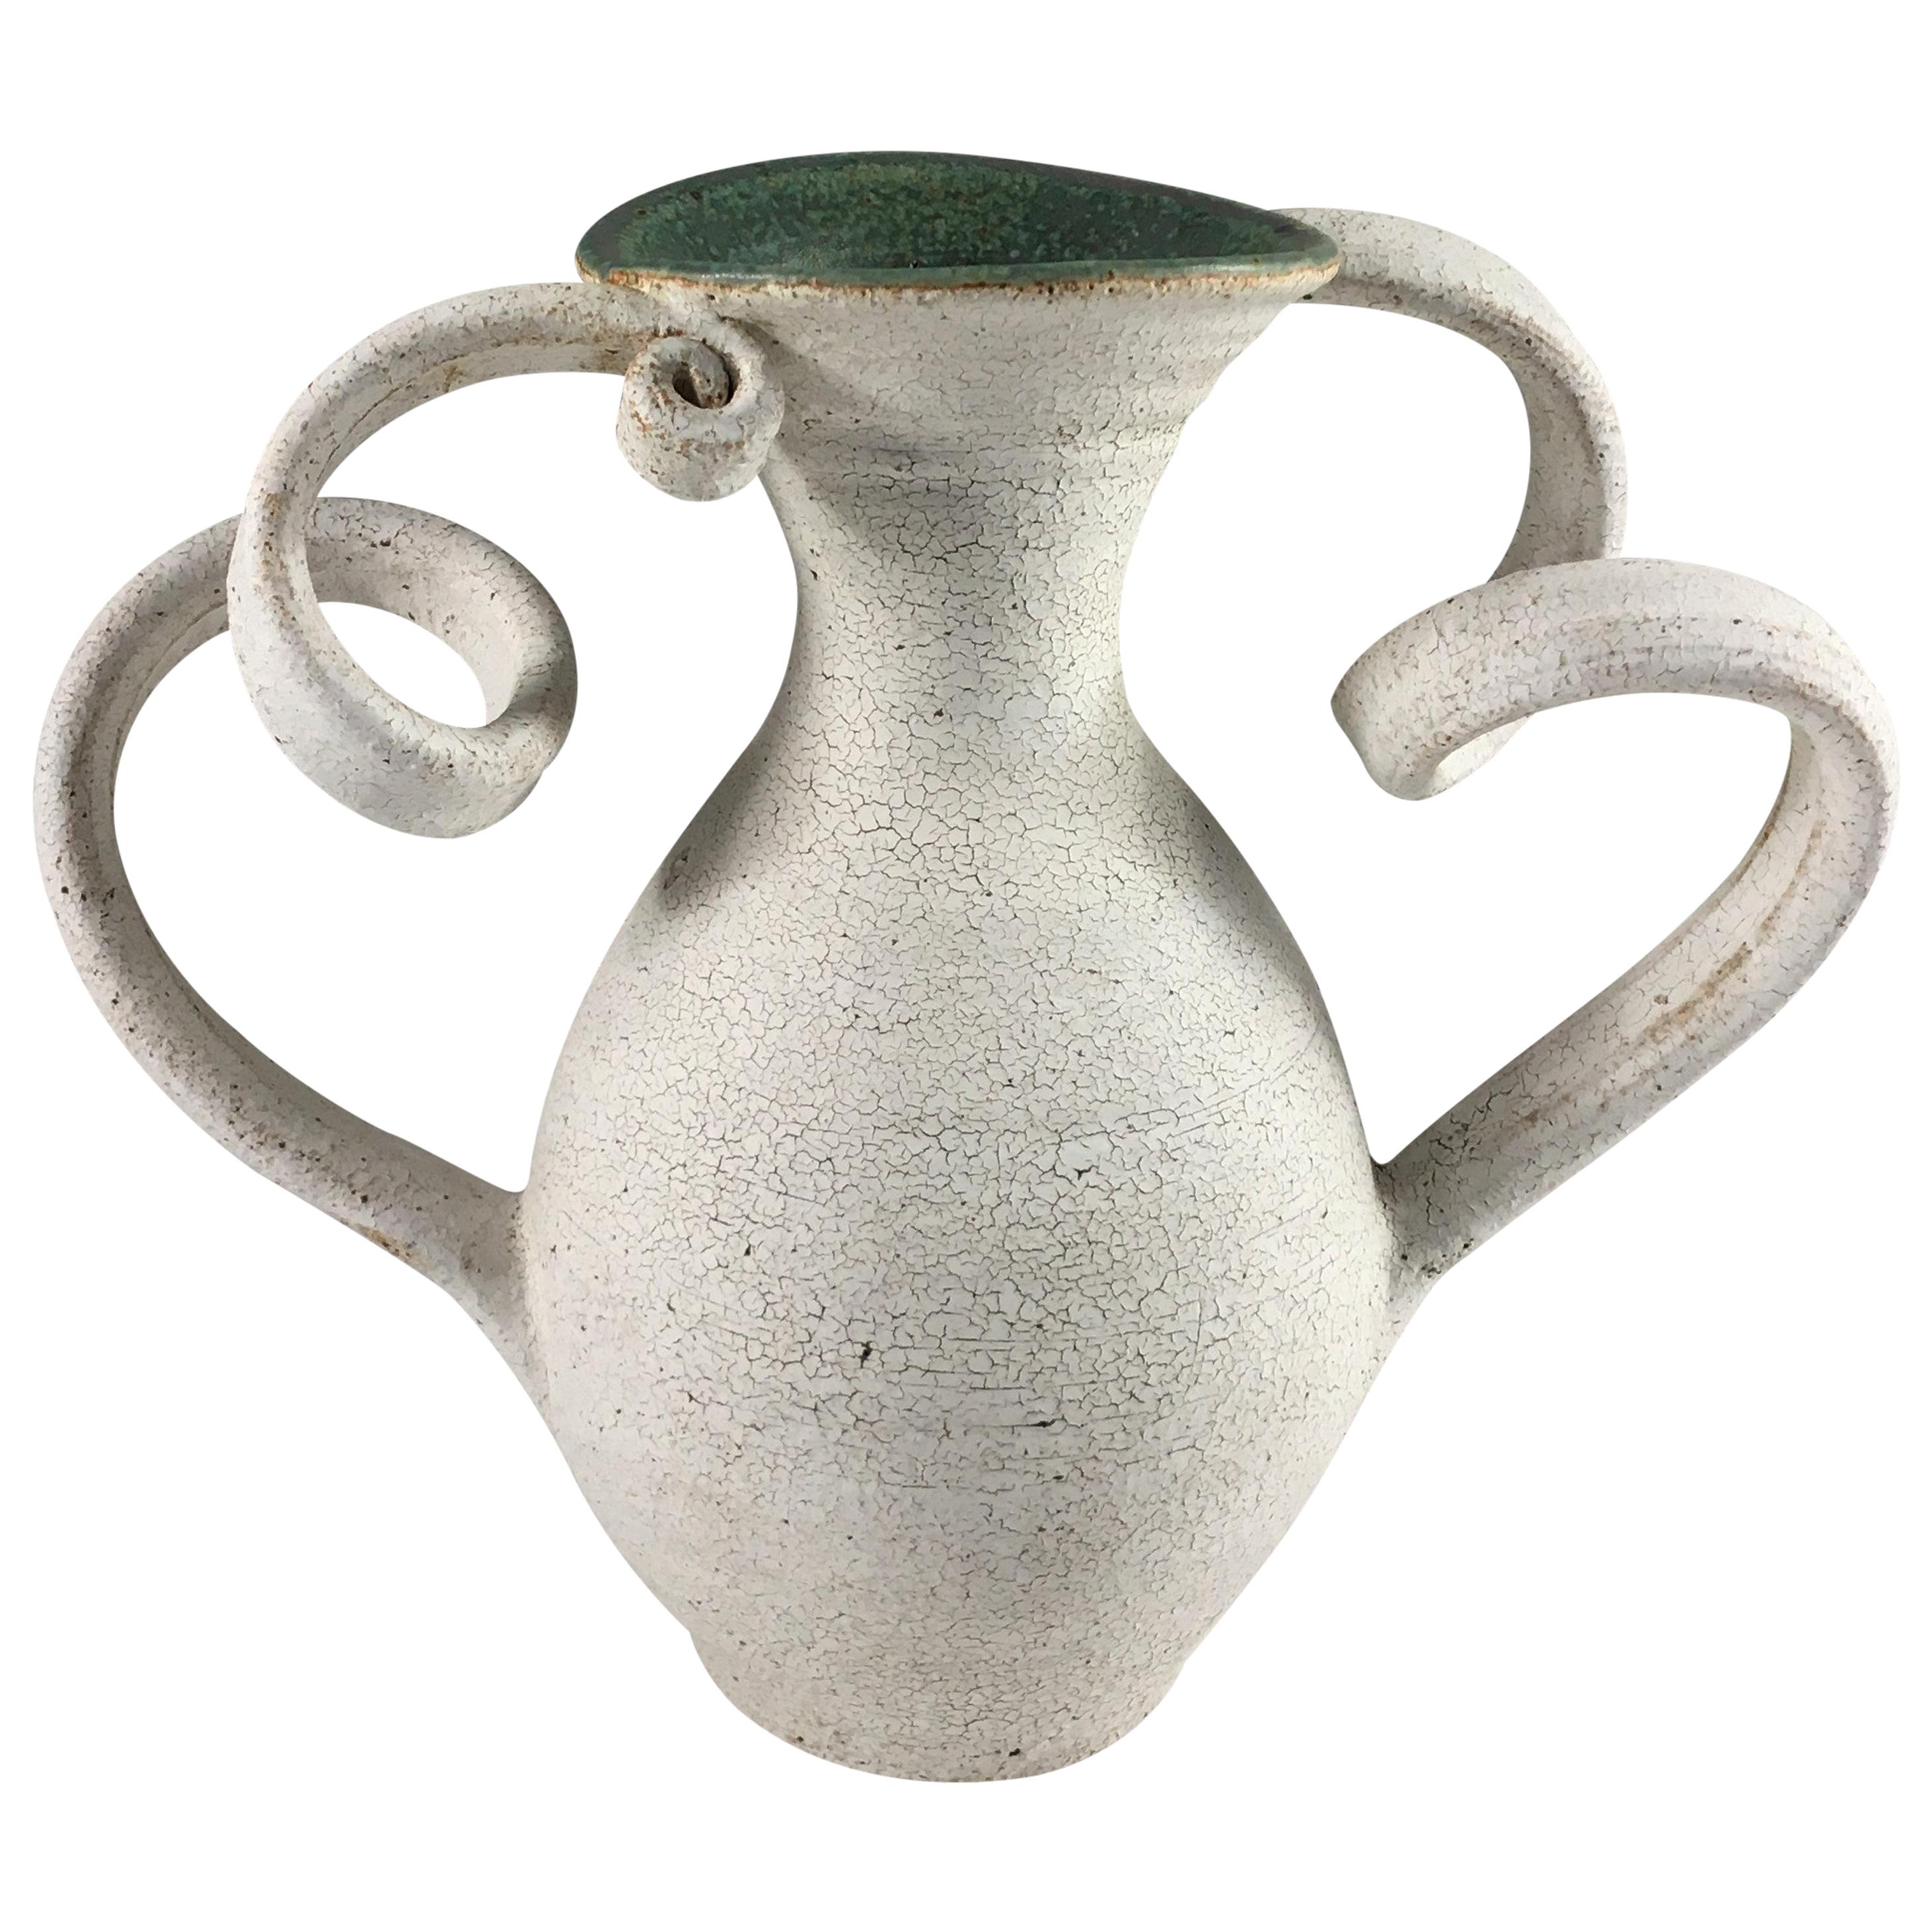 Ceramic Amphora Vase with Wide Opening by Yumiko Kuga